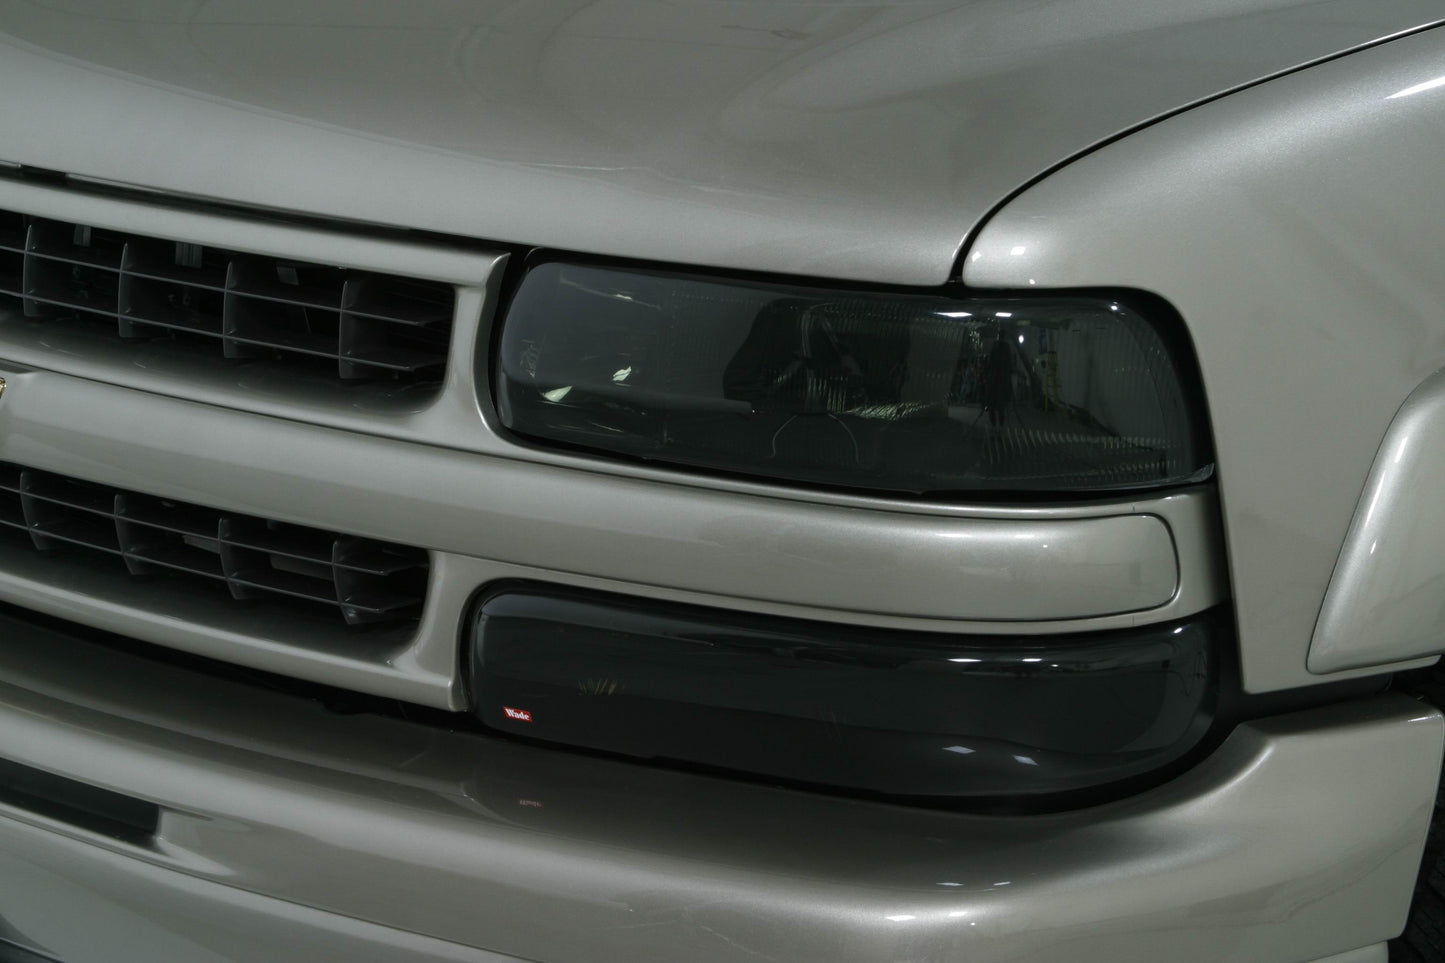 1991 Toyota Paseo Head Light Covers